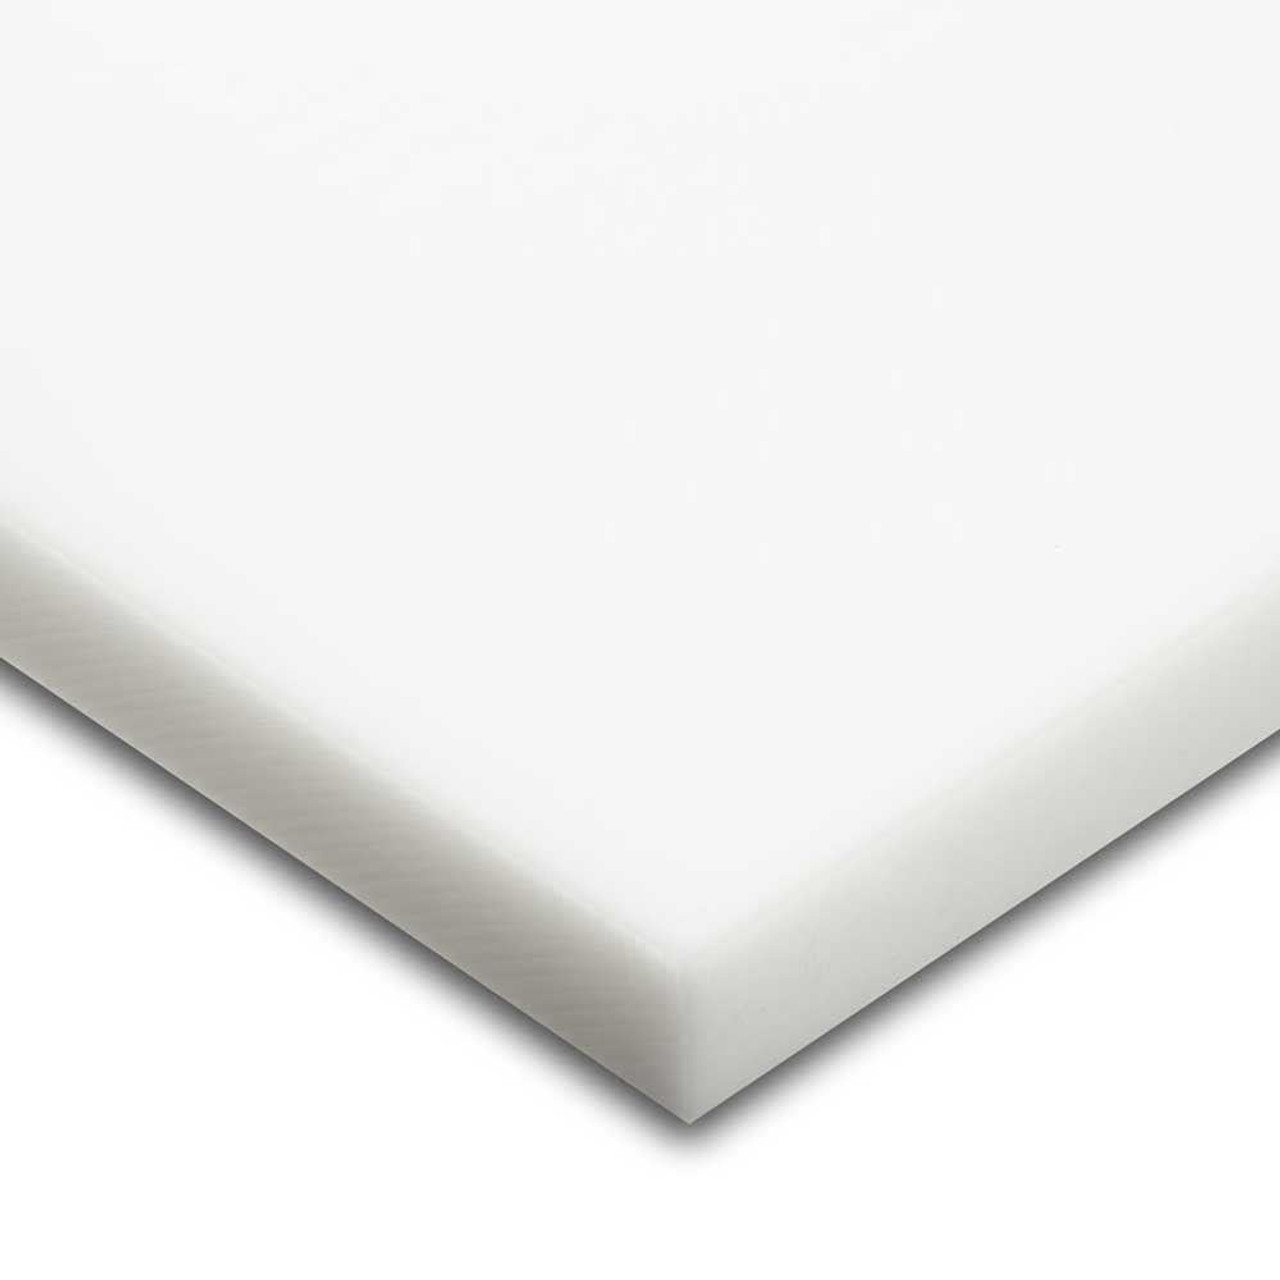 2" x 2" x 24", Acetal Plastic Sheet, White